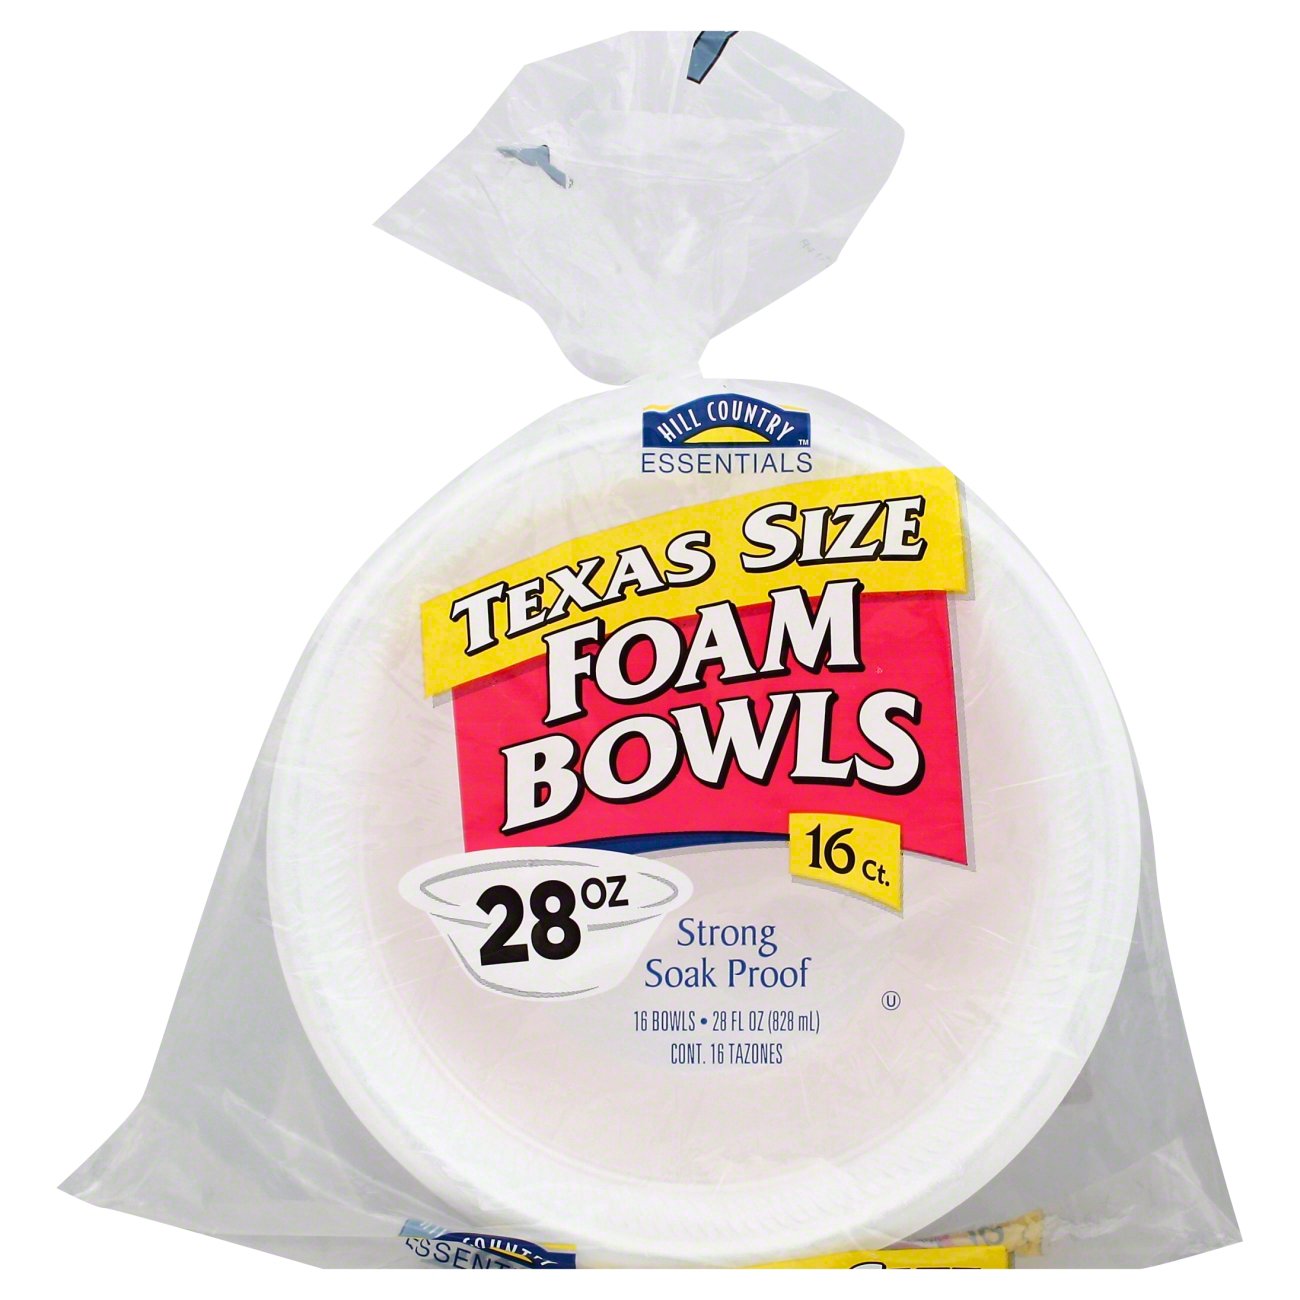 Hill Country Essentials 28 oz Texas Size Foam Bowls